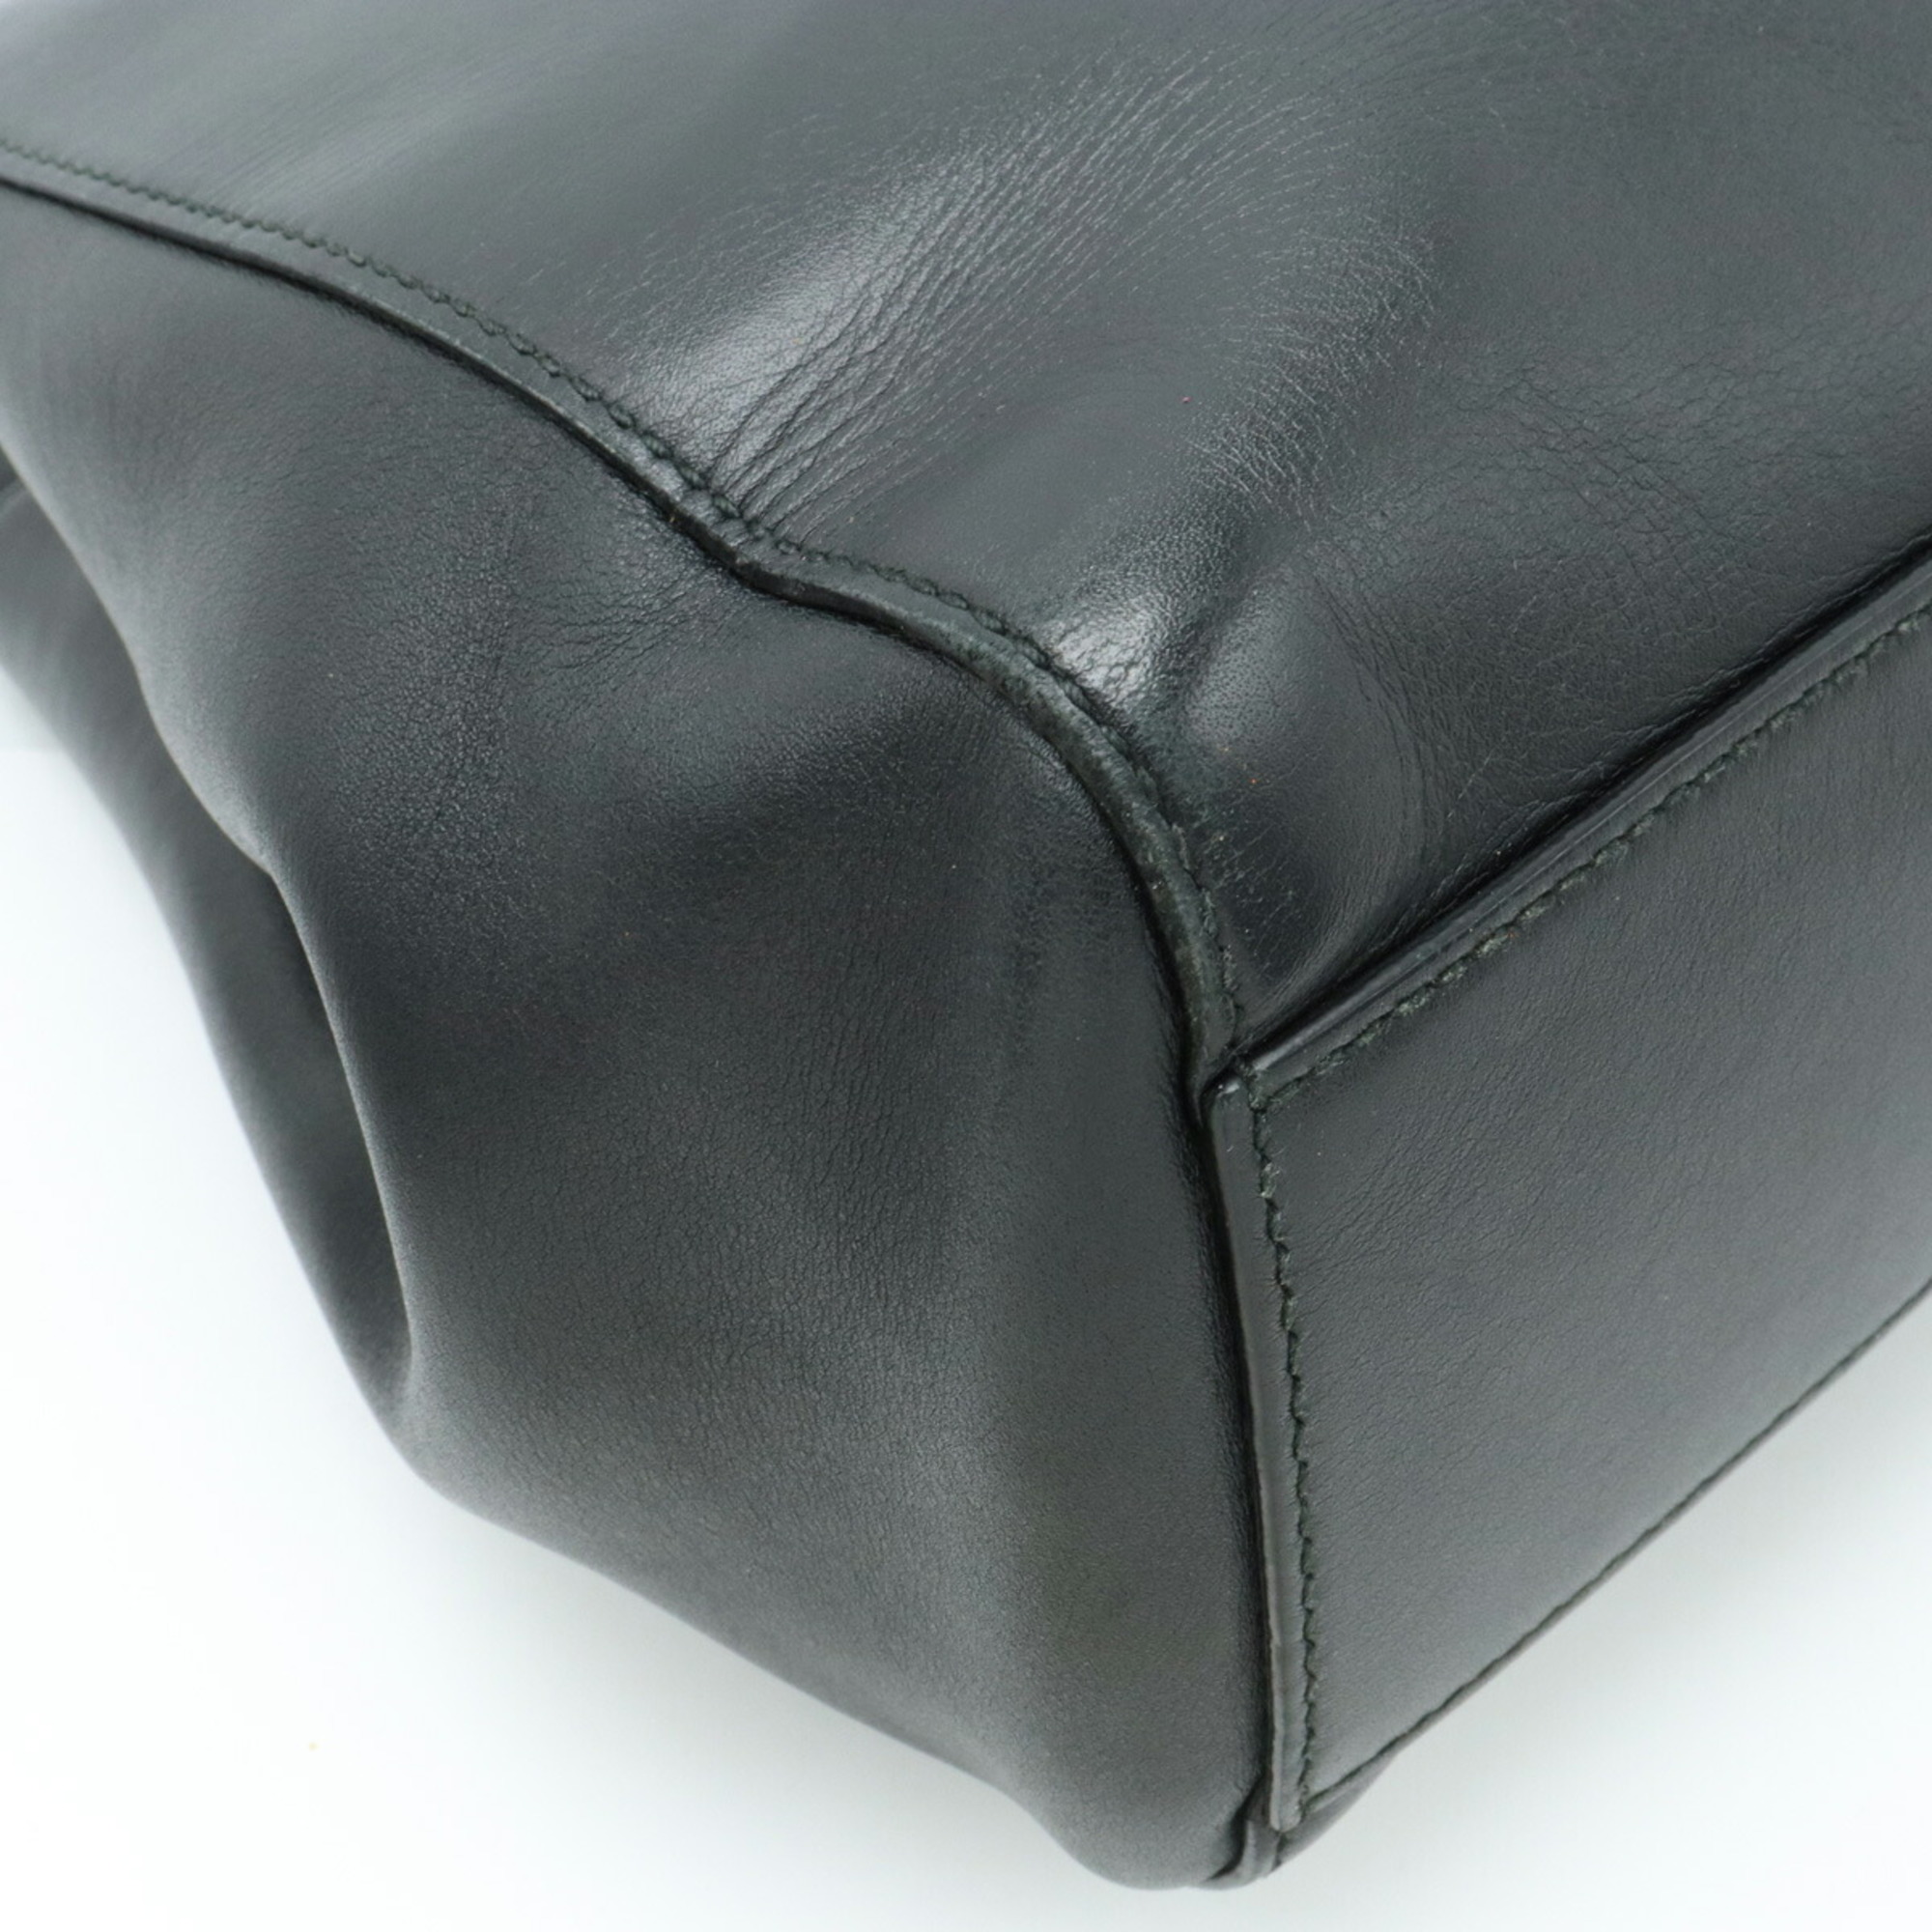 GUCCI Gucci Nimfair Bamboo Handbag Shoulder Bag Leather Faux Pearl Black 453766